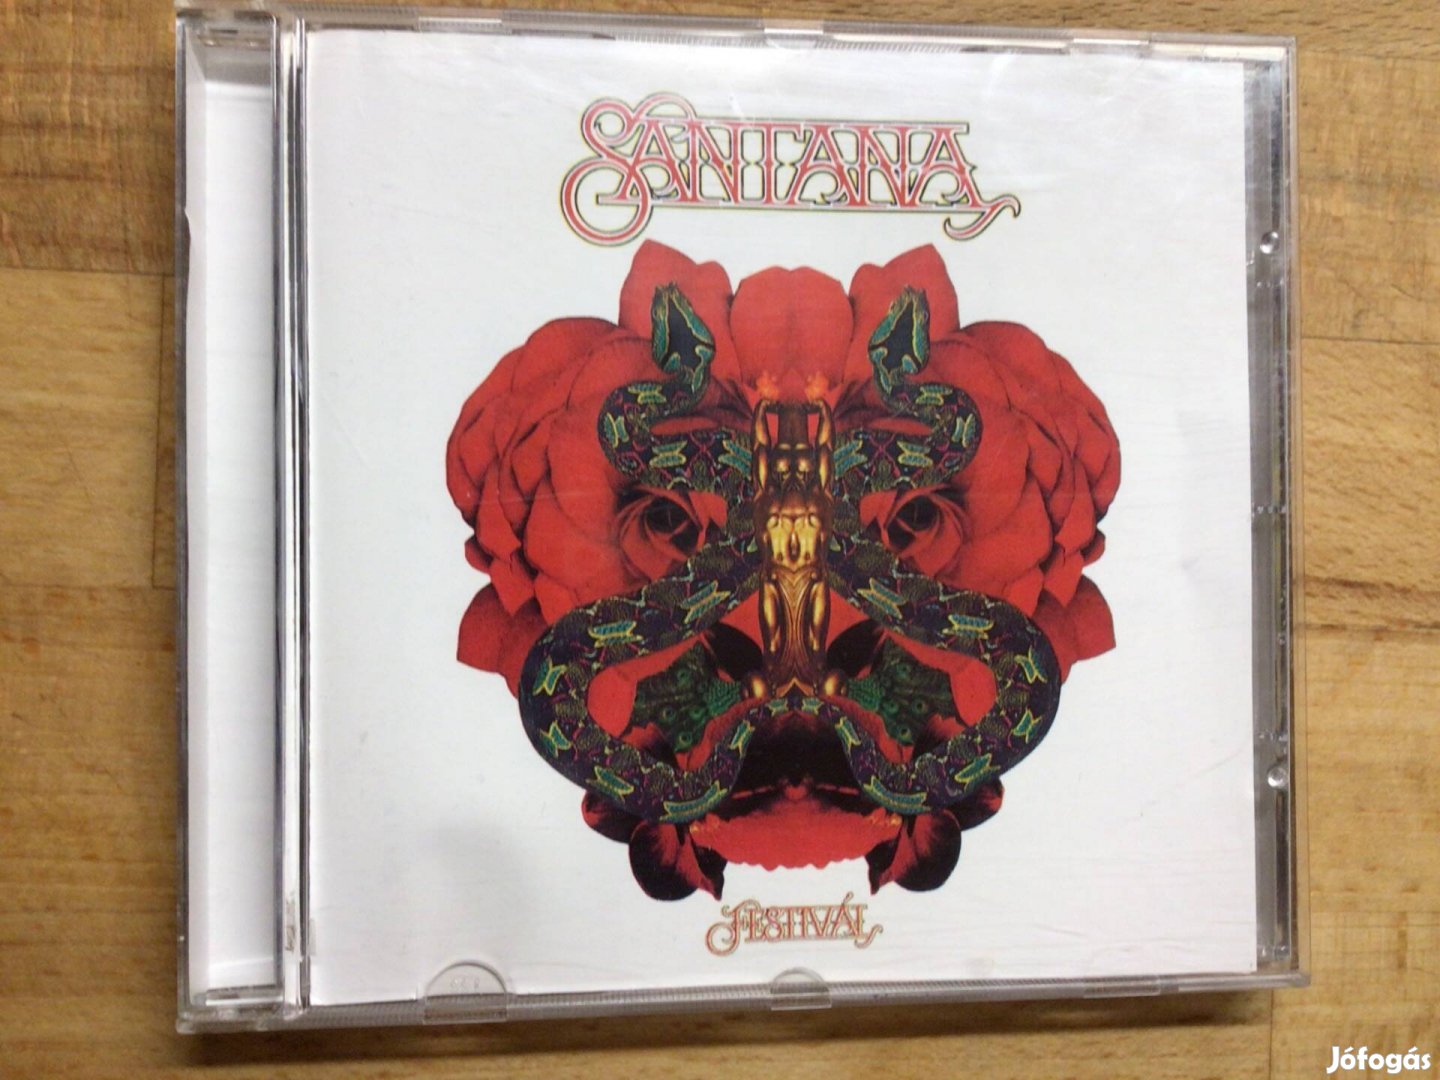 Santana - Festival, cd lemez